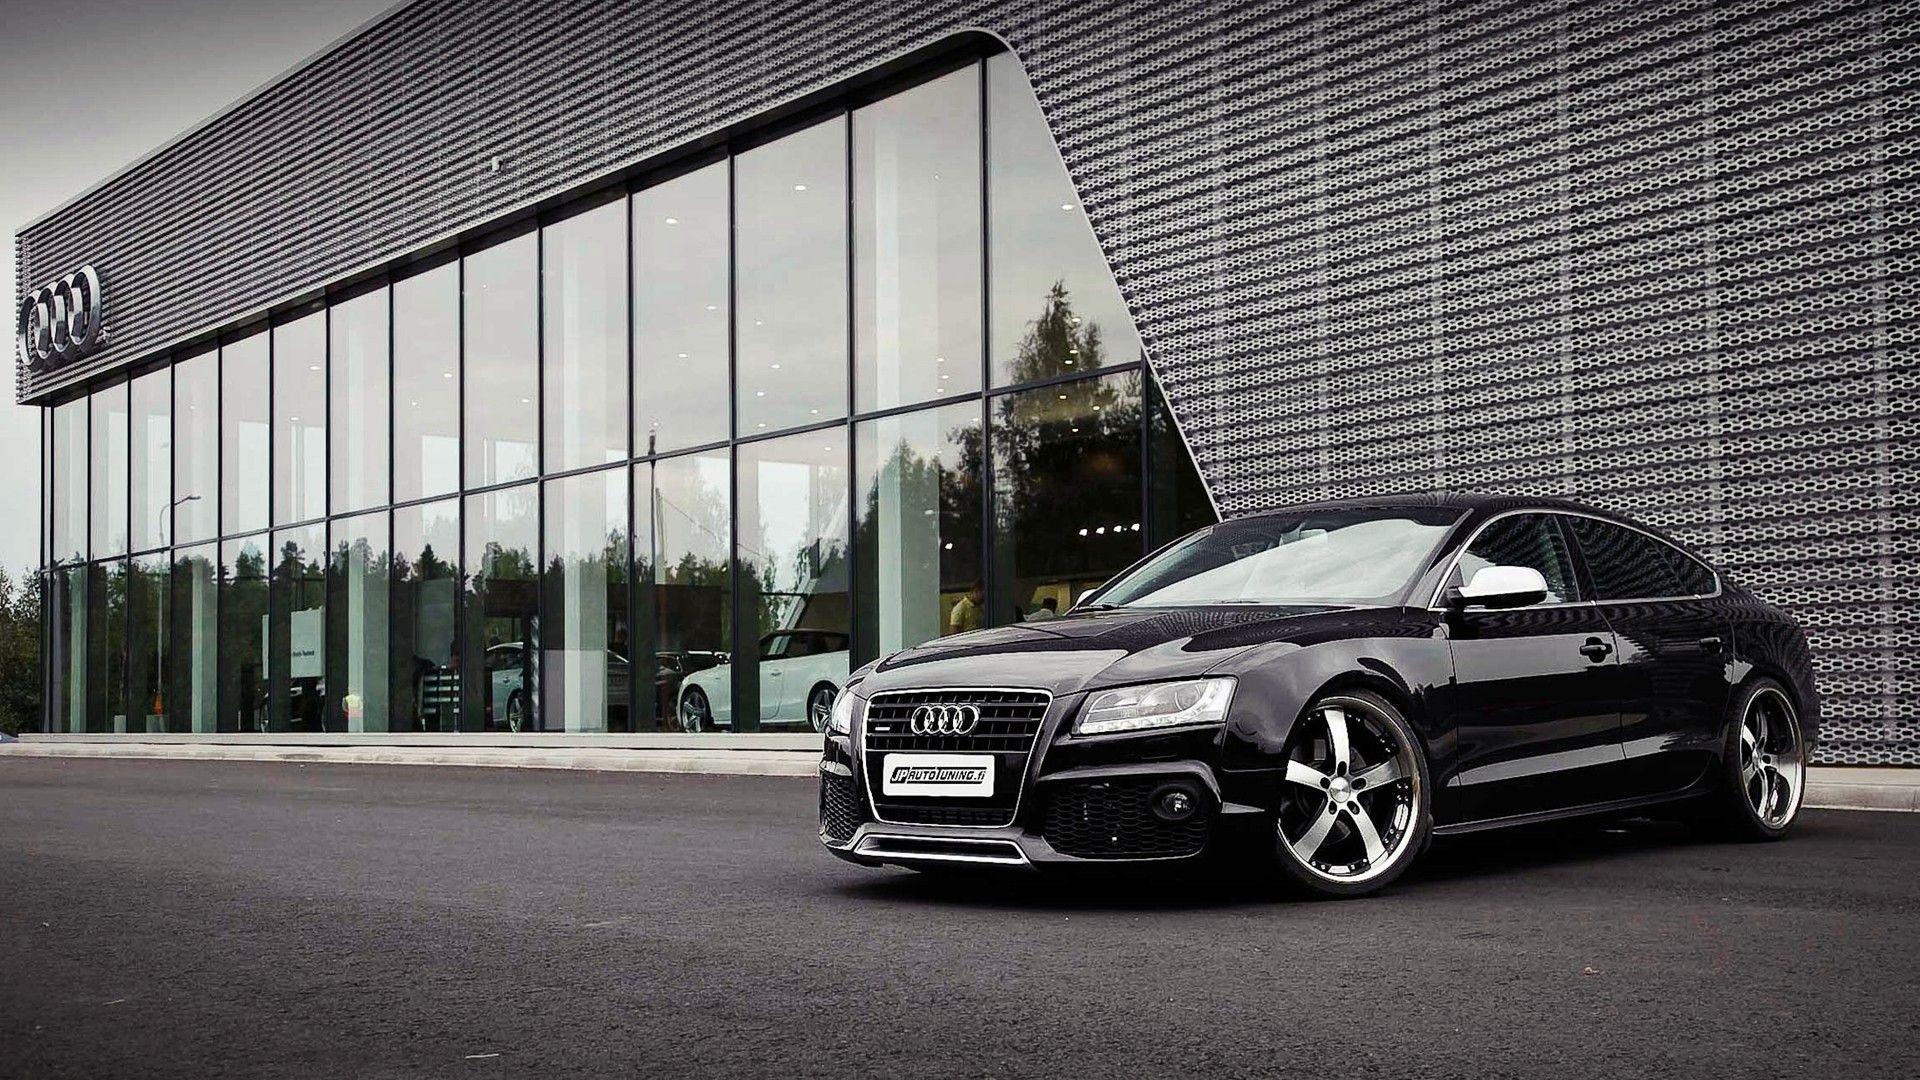 Black Audi RS5 HD Wallpaper 1080p. Places to Visit